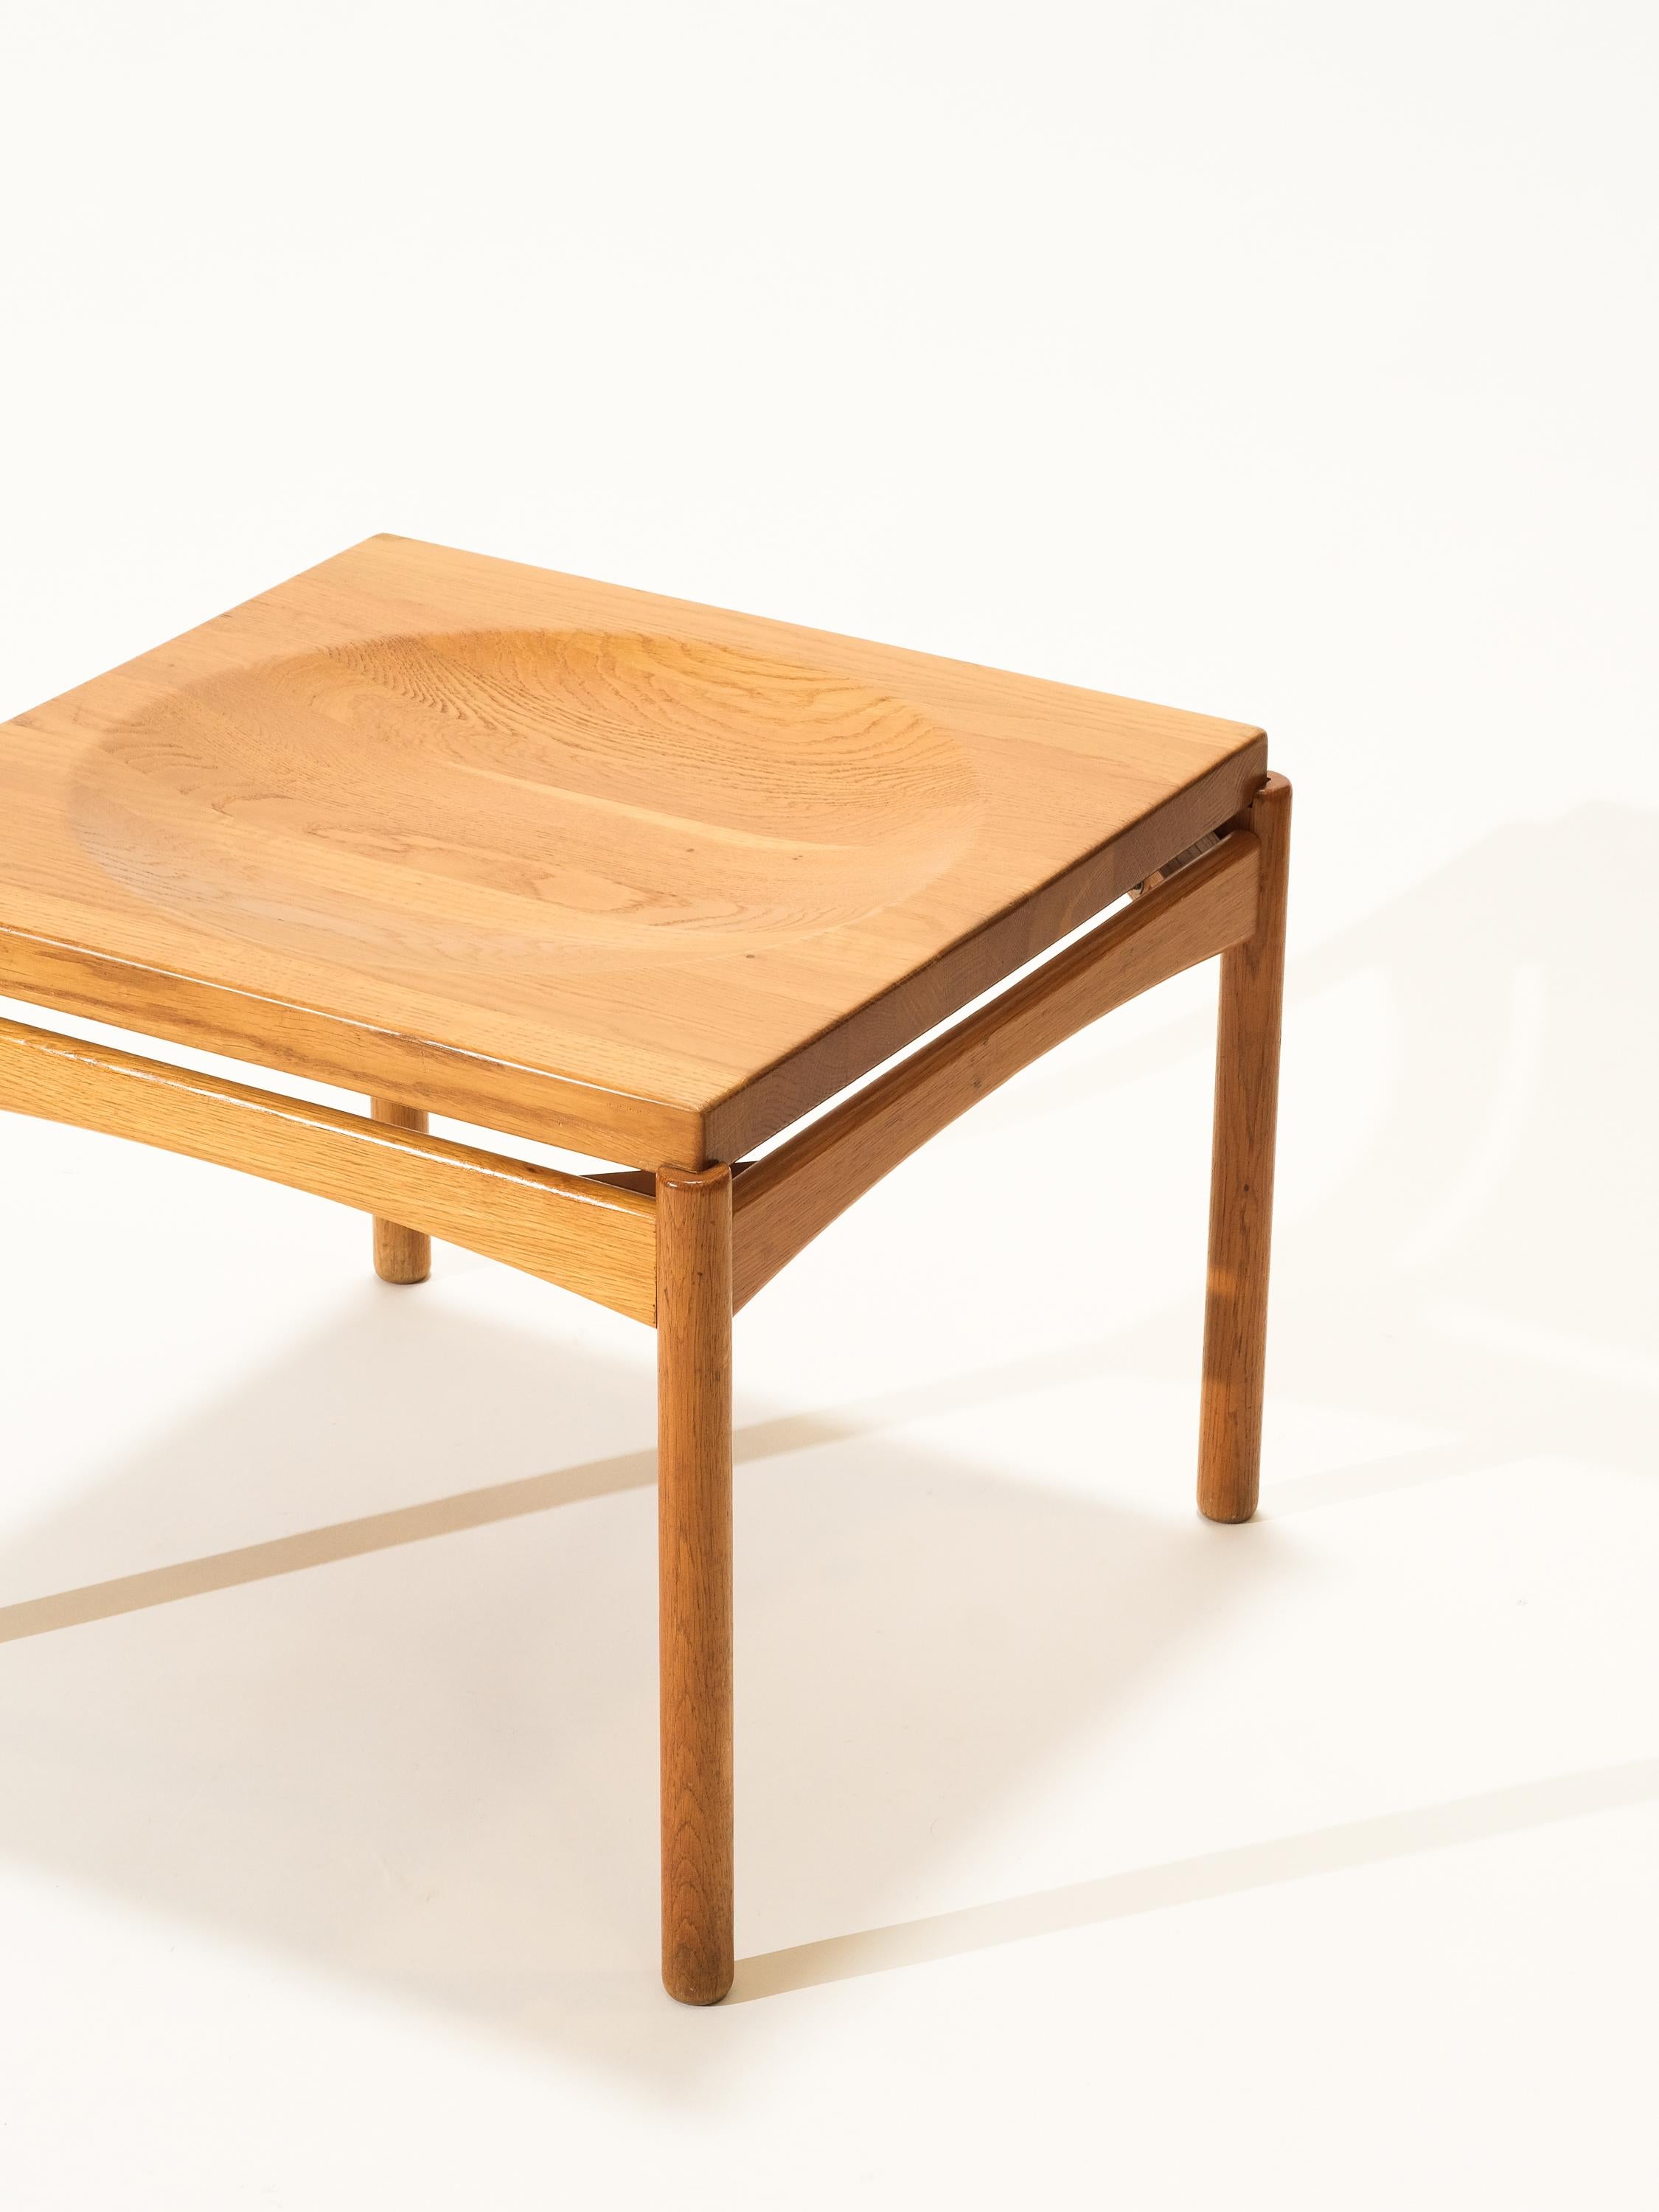 Scandinavian Modern Solid Oak Coffee/Tray Table by Gunnar Myrstrand for Källemo, Sweden, 1960s For Sale